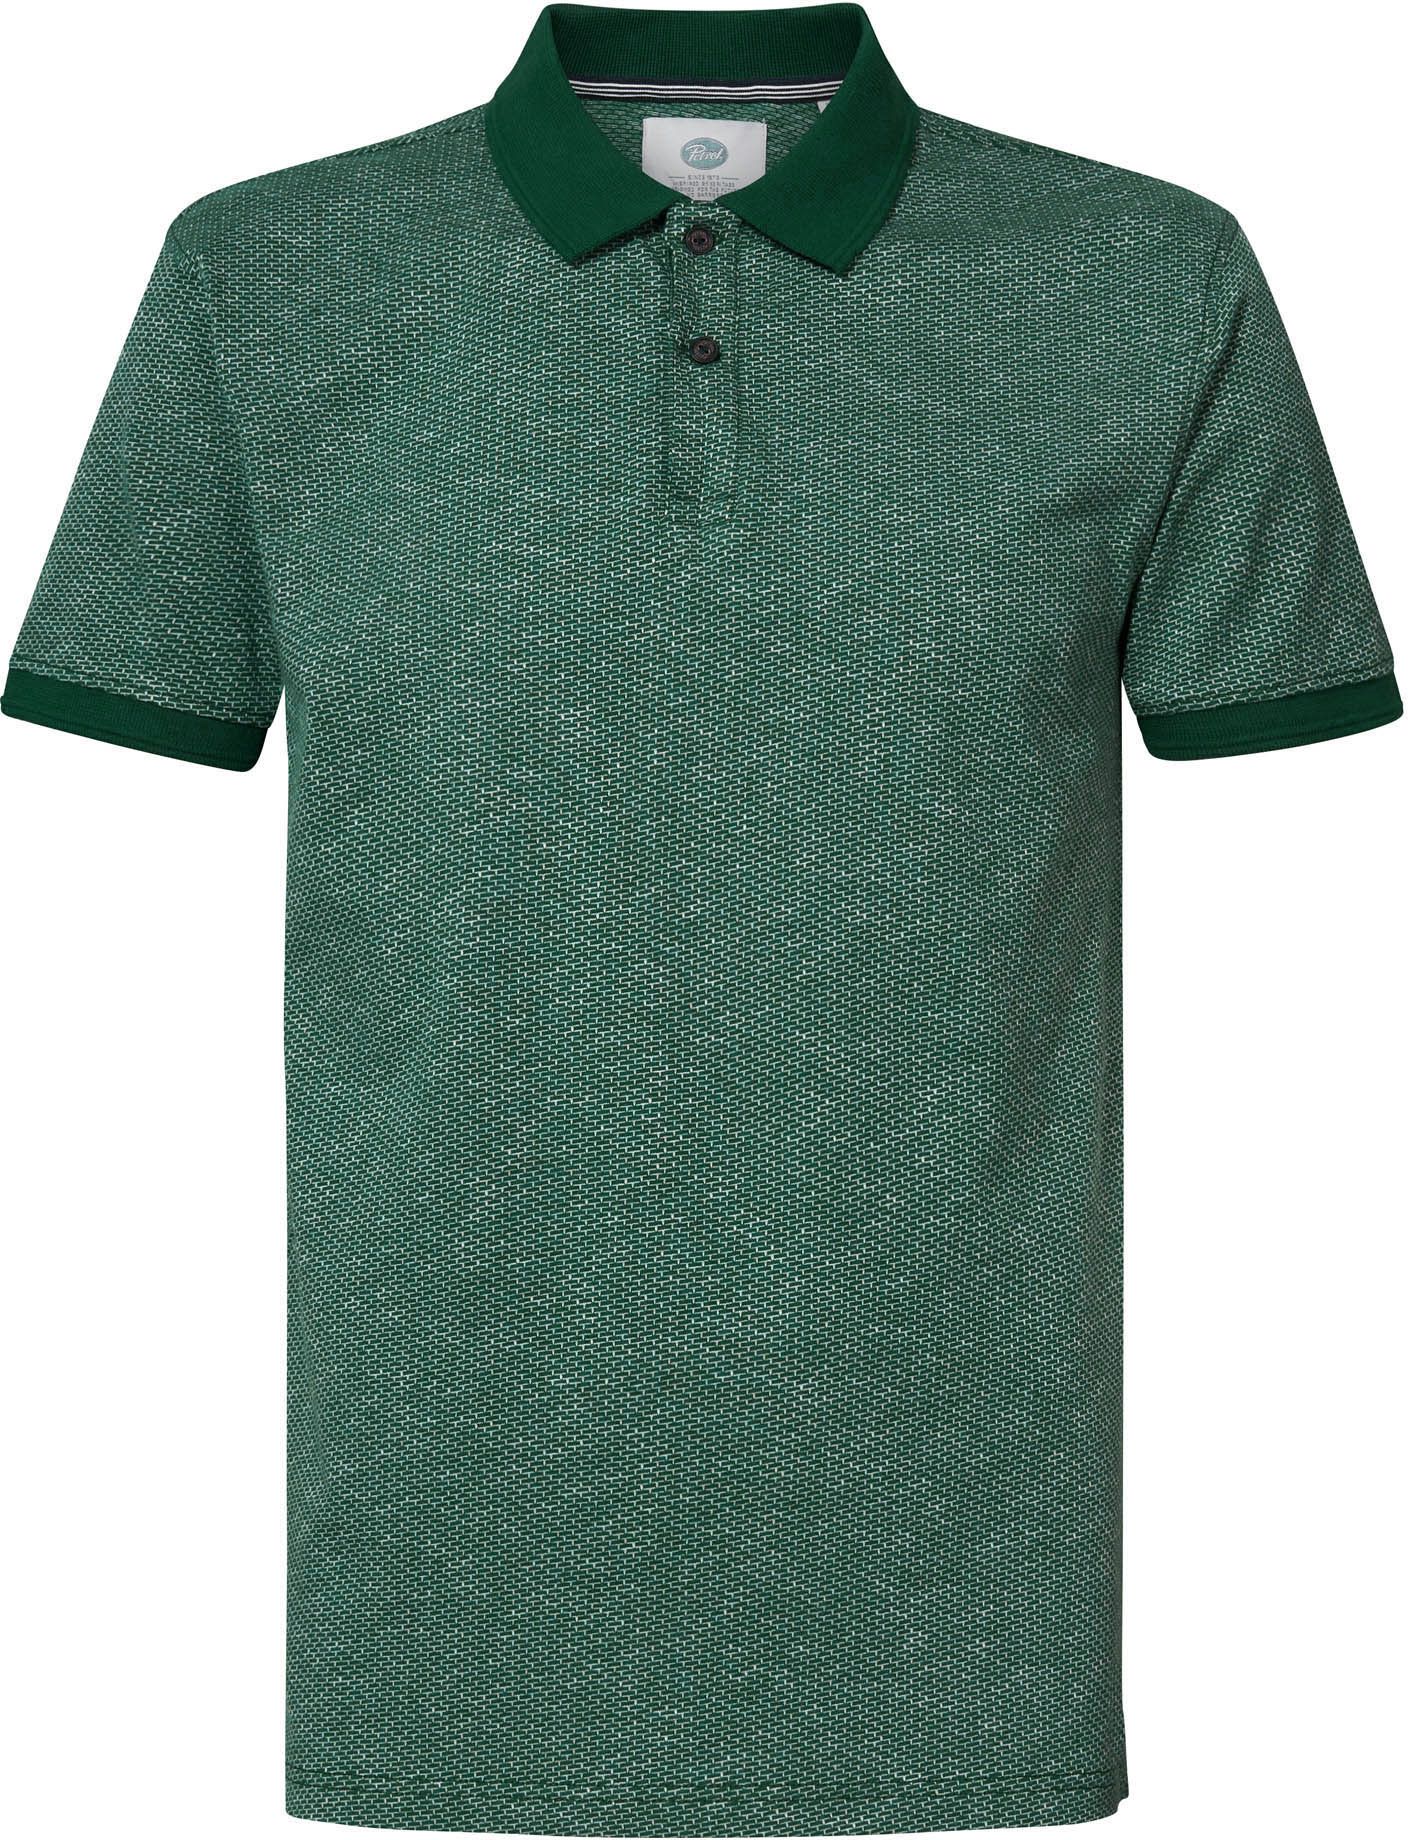 Petrol Polo Shirt Blended Dark Green Green size L